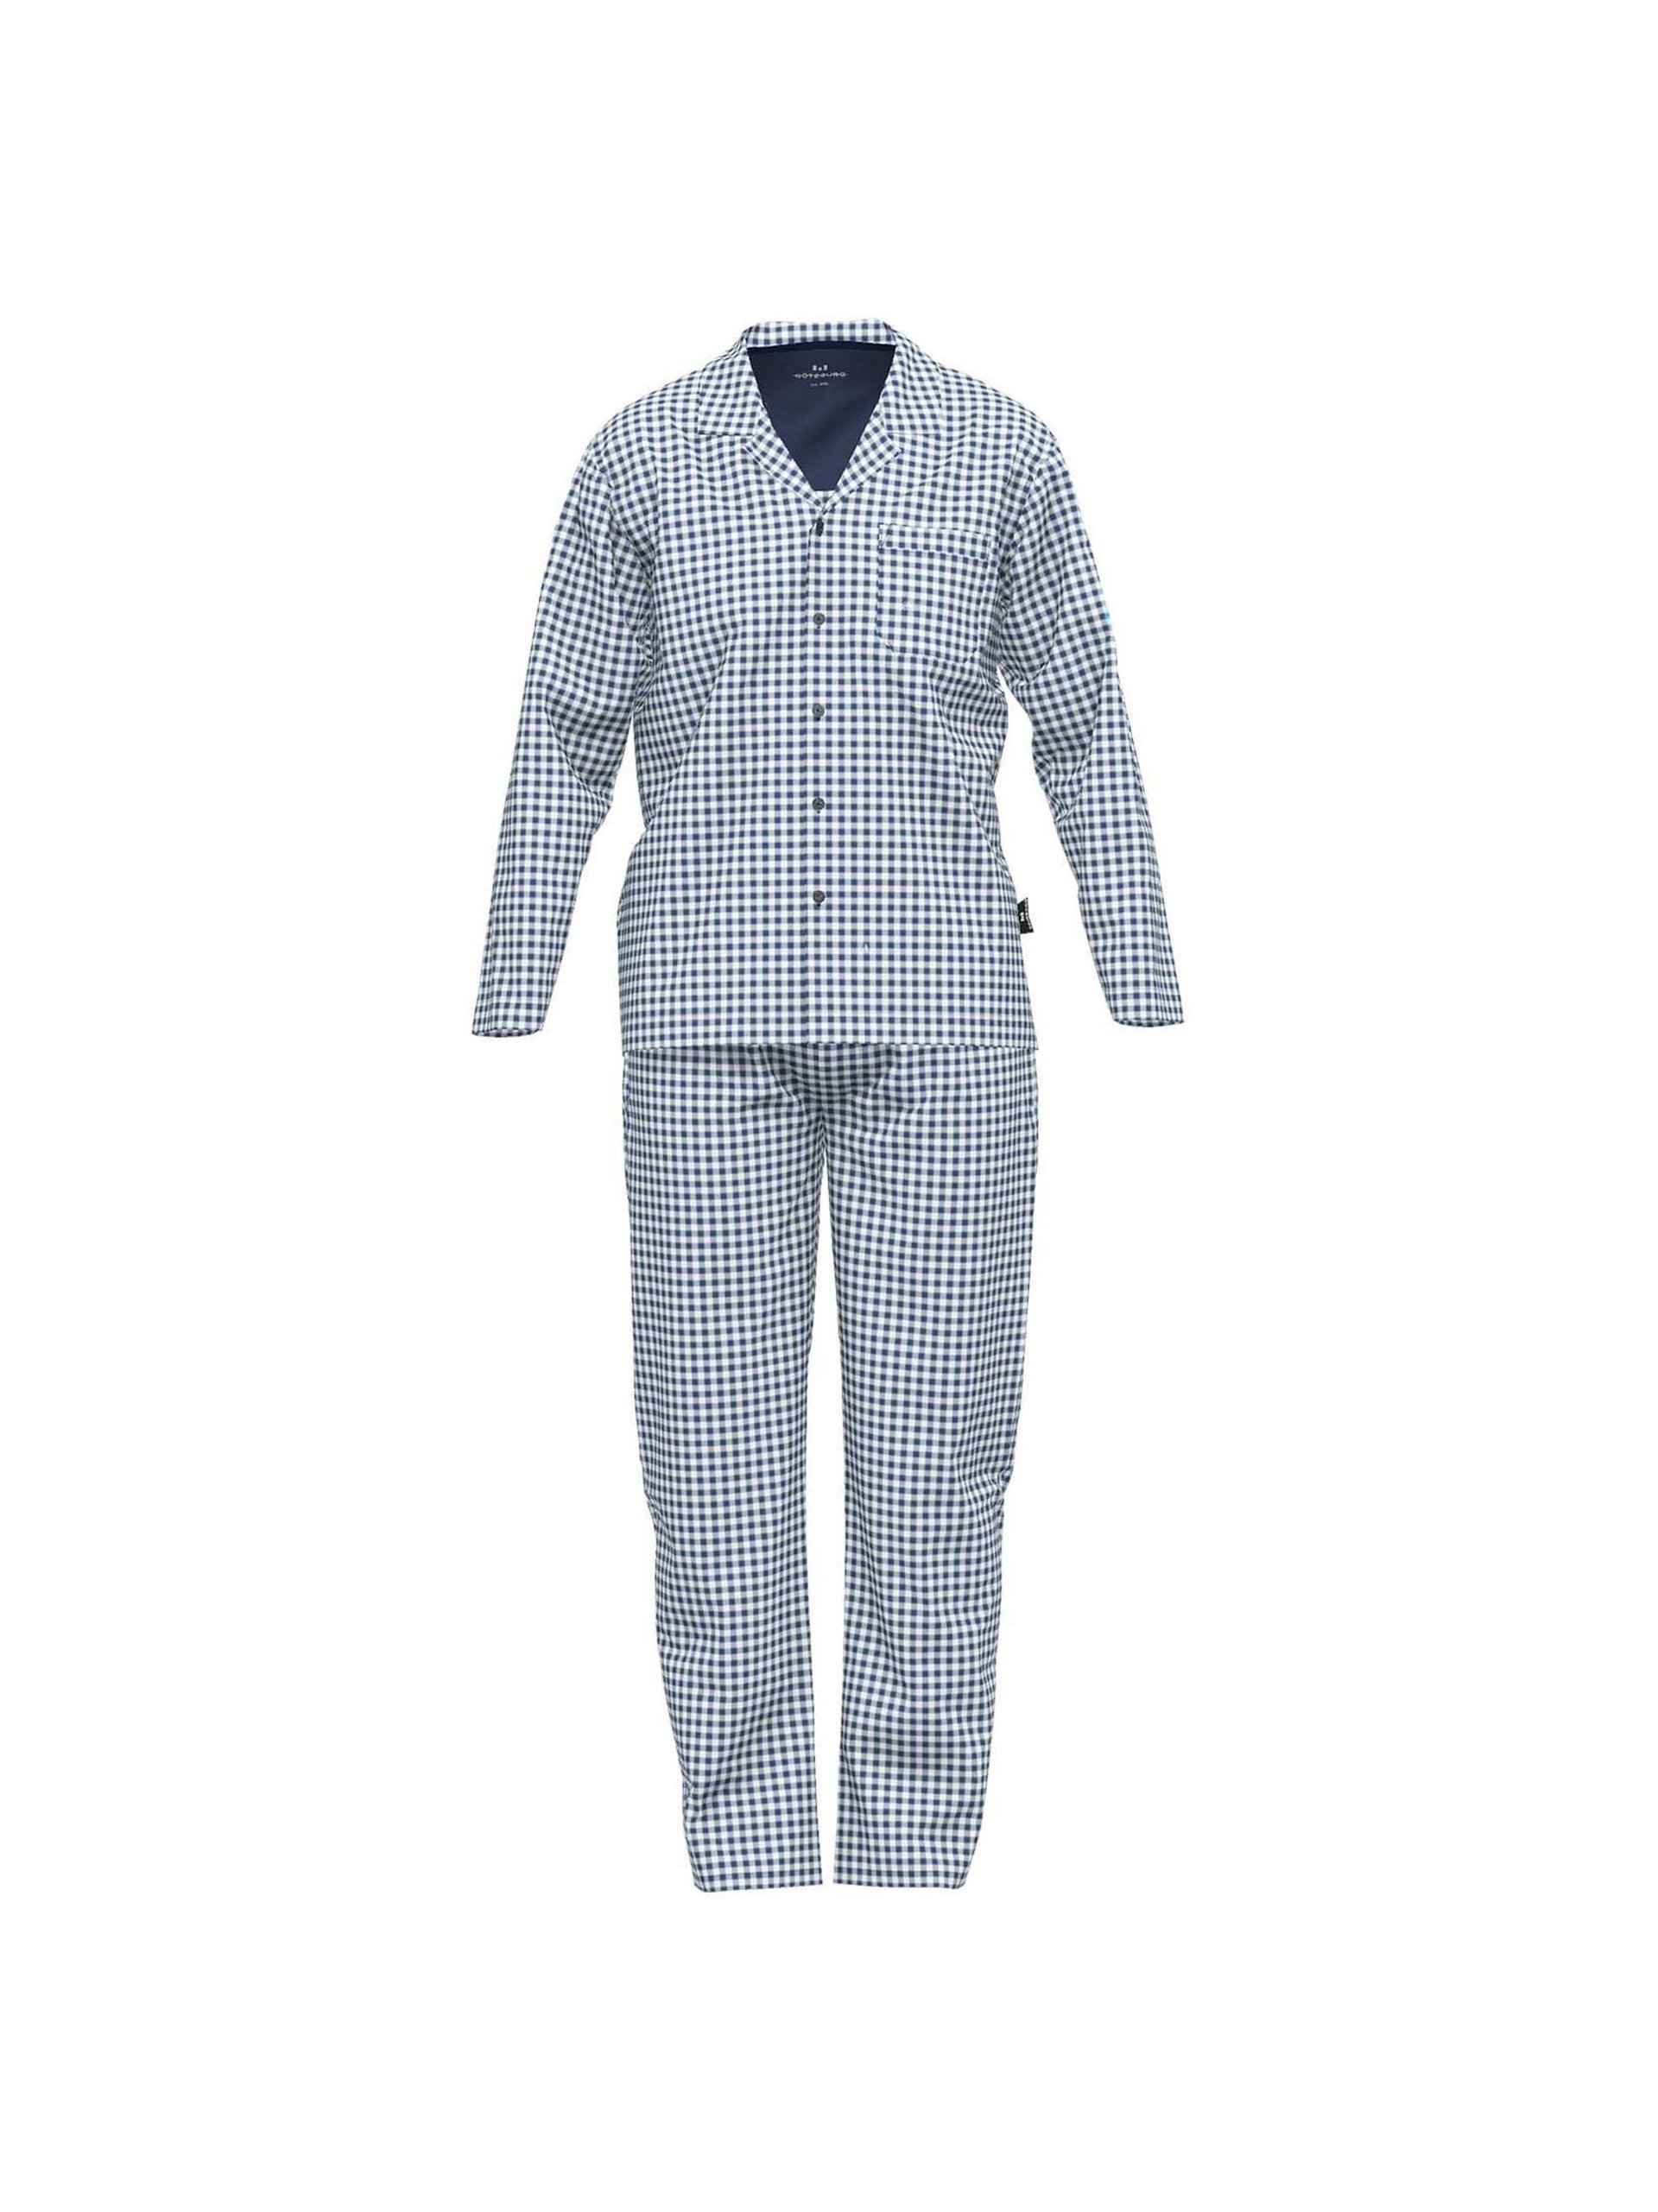 Herren Pyjama kaufen GÖTZBURG online